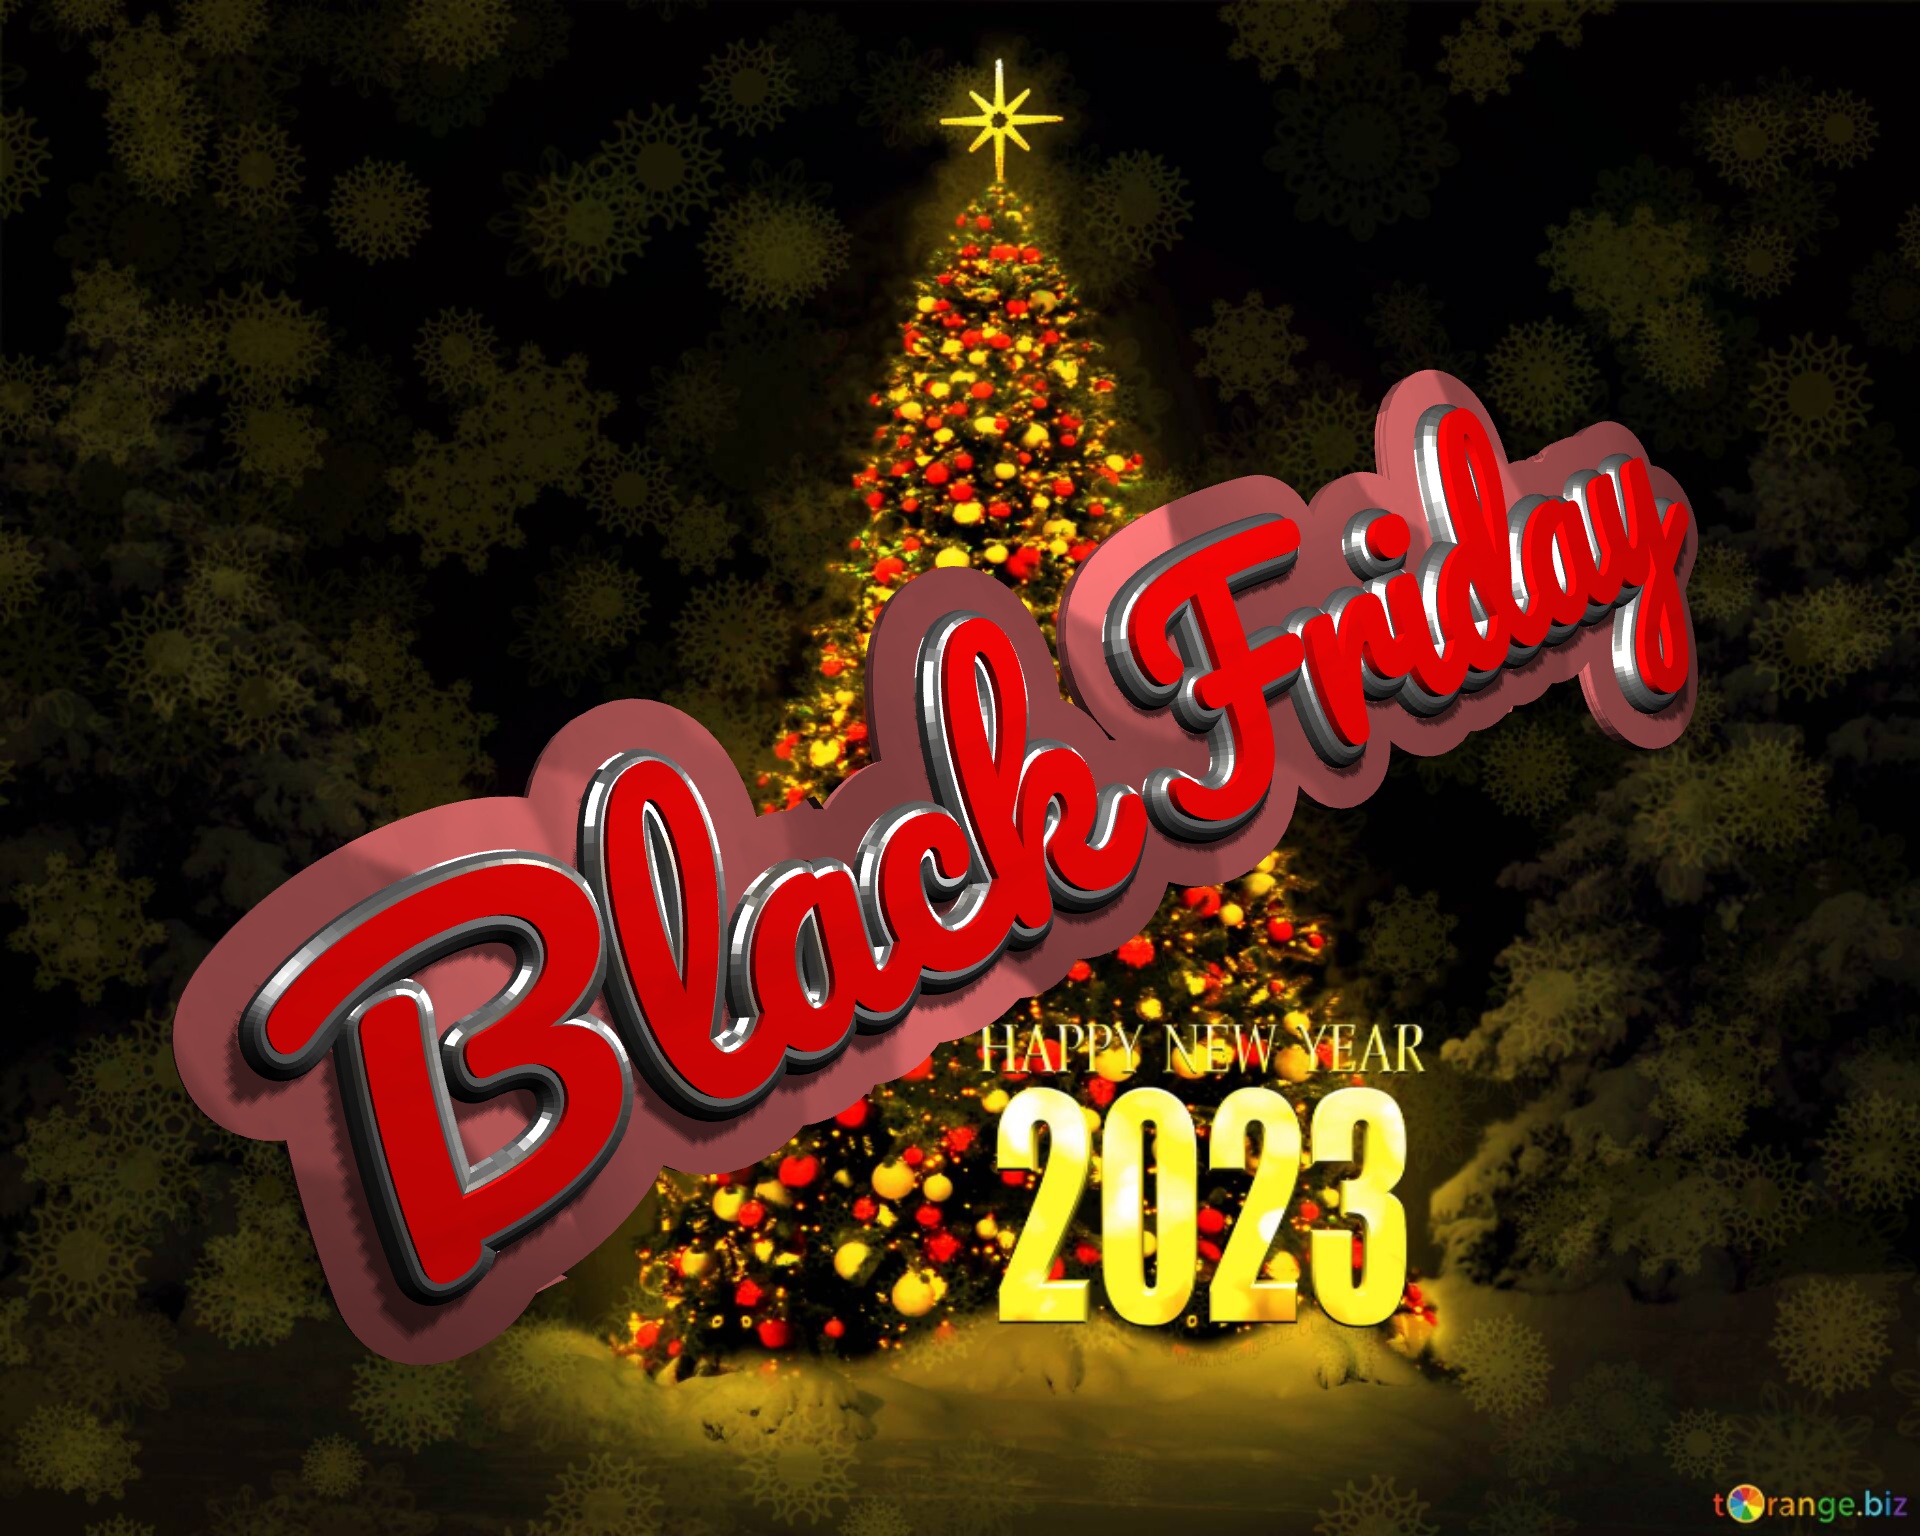 Black Friday Black Friday Christmas tree Shiny happy new year 2023 background №0